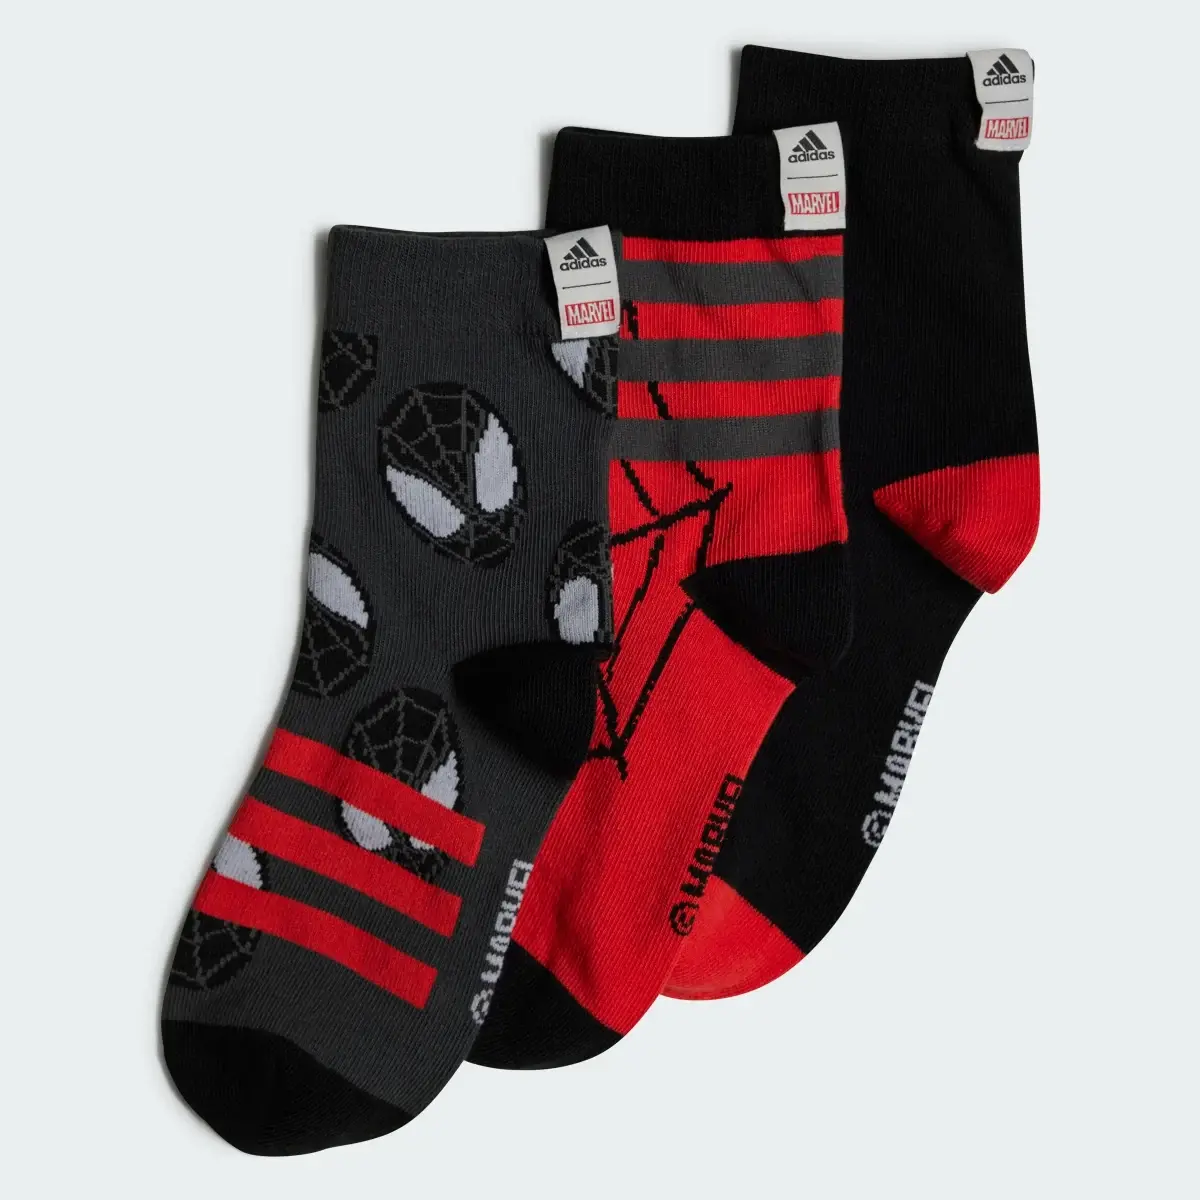 Adidas Marvel Spider-Man Bilekli Çorap - 3 Çift. 2